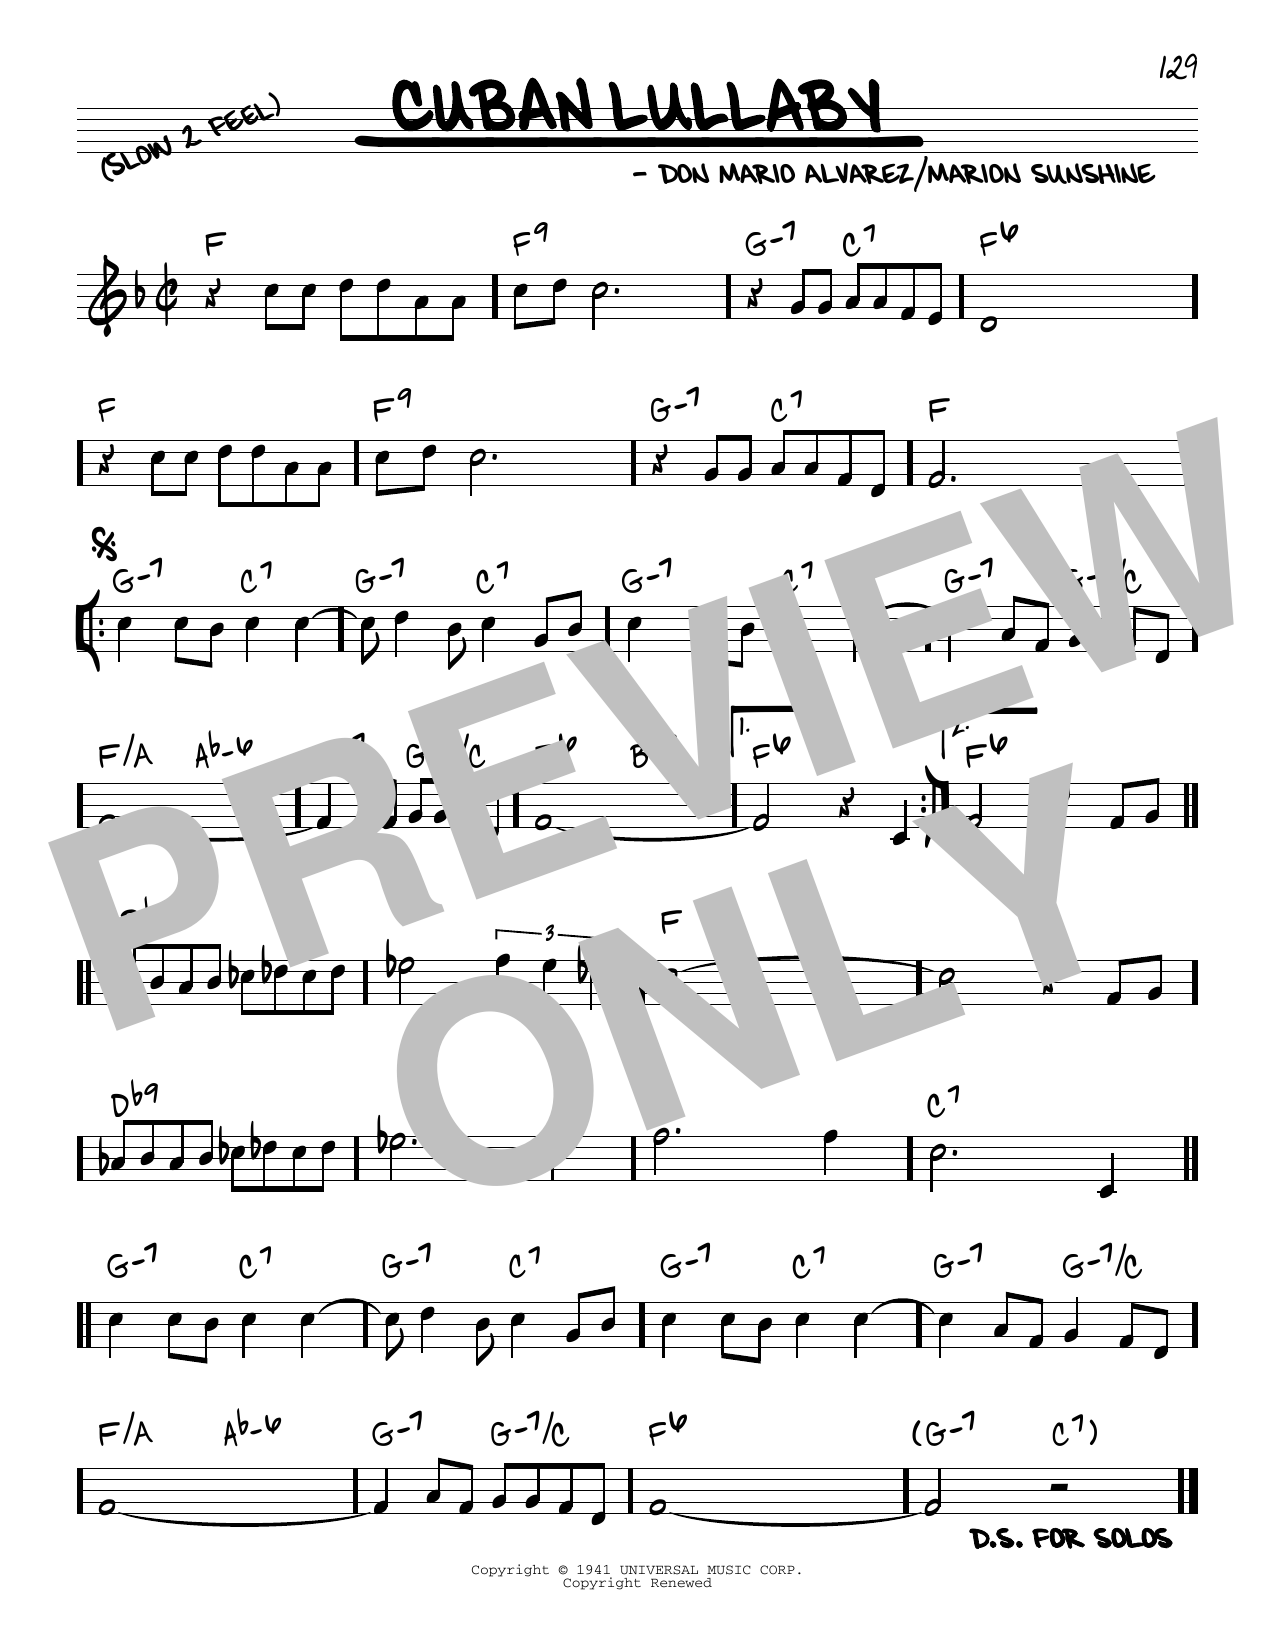 Don Mario Alvarez Cuban Lullaby Sheet Music Notes & Chords for Real Book – Melody & Chords - Download or Print PDF